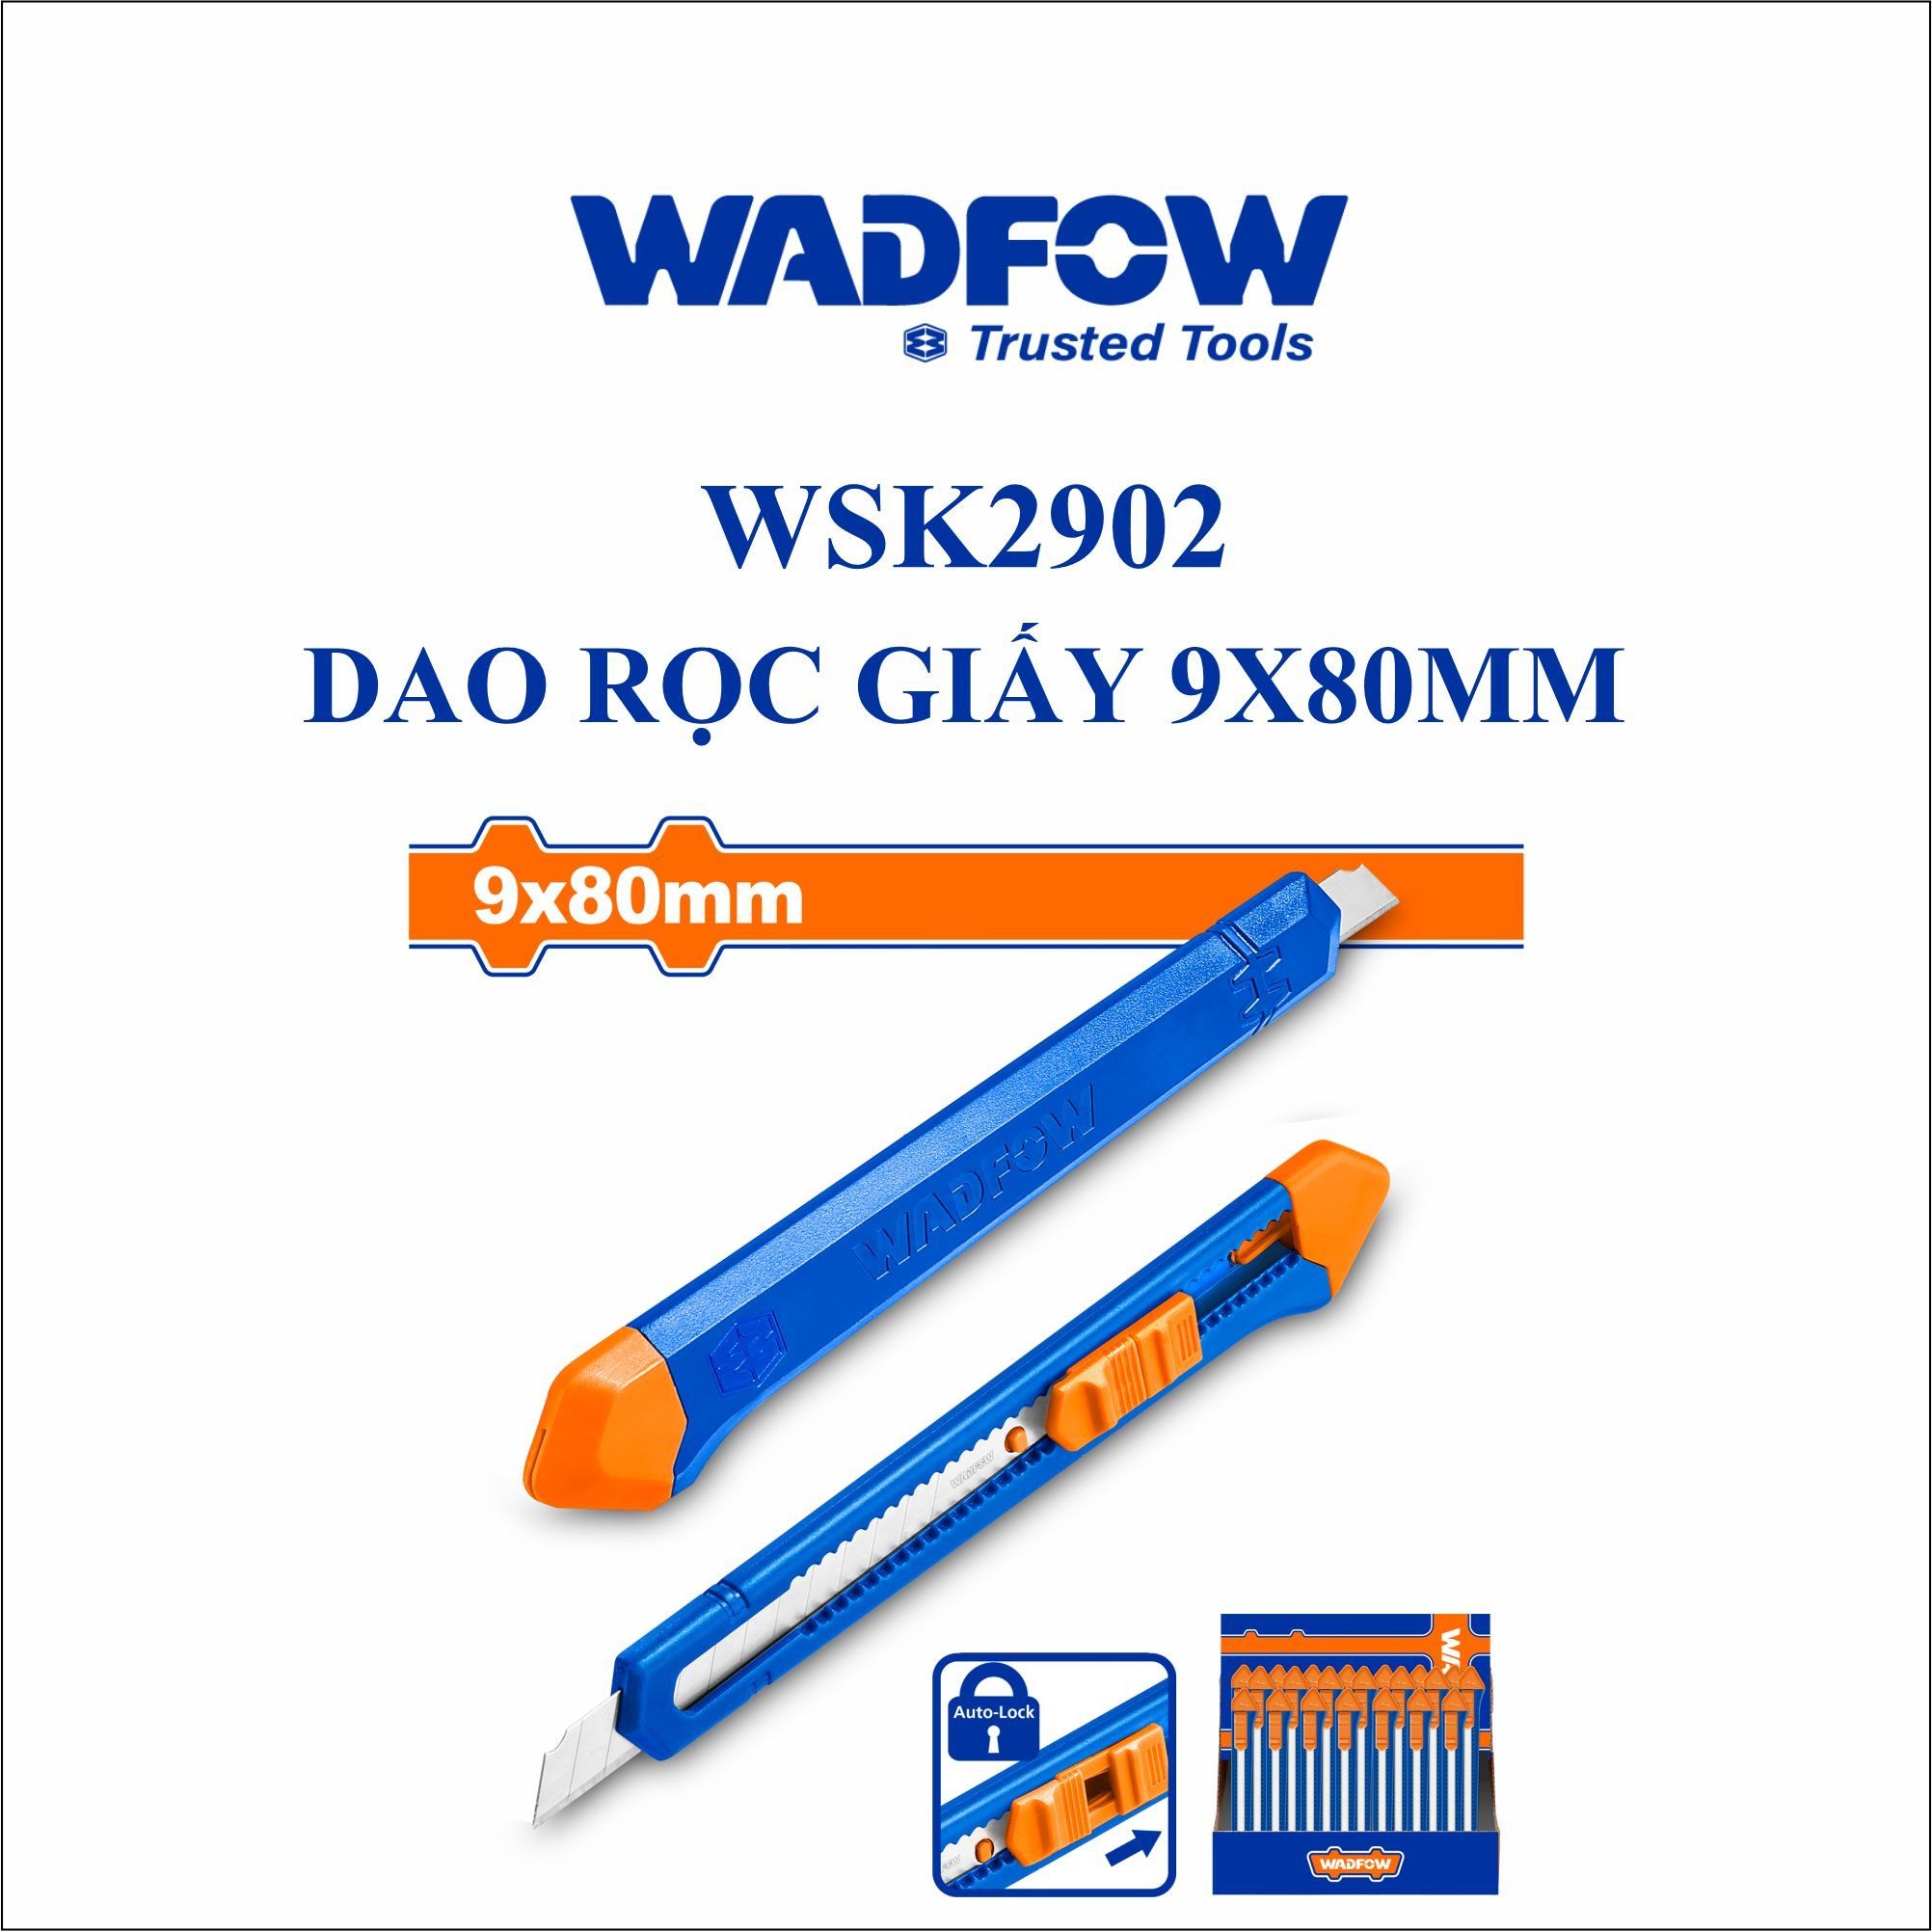  Dao rọc giấy 9x80mm WADFOW WSK2902 